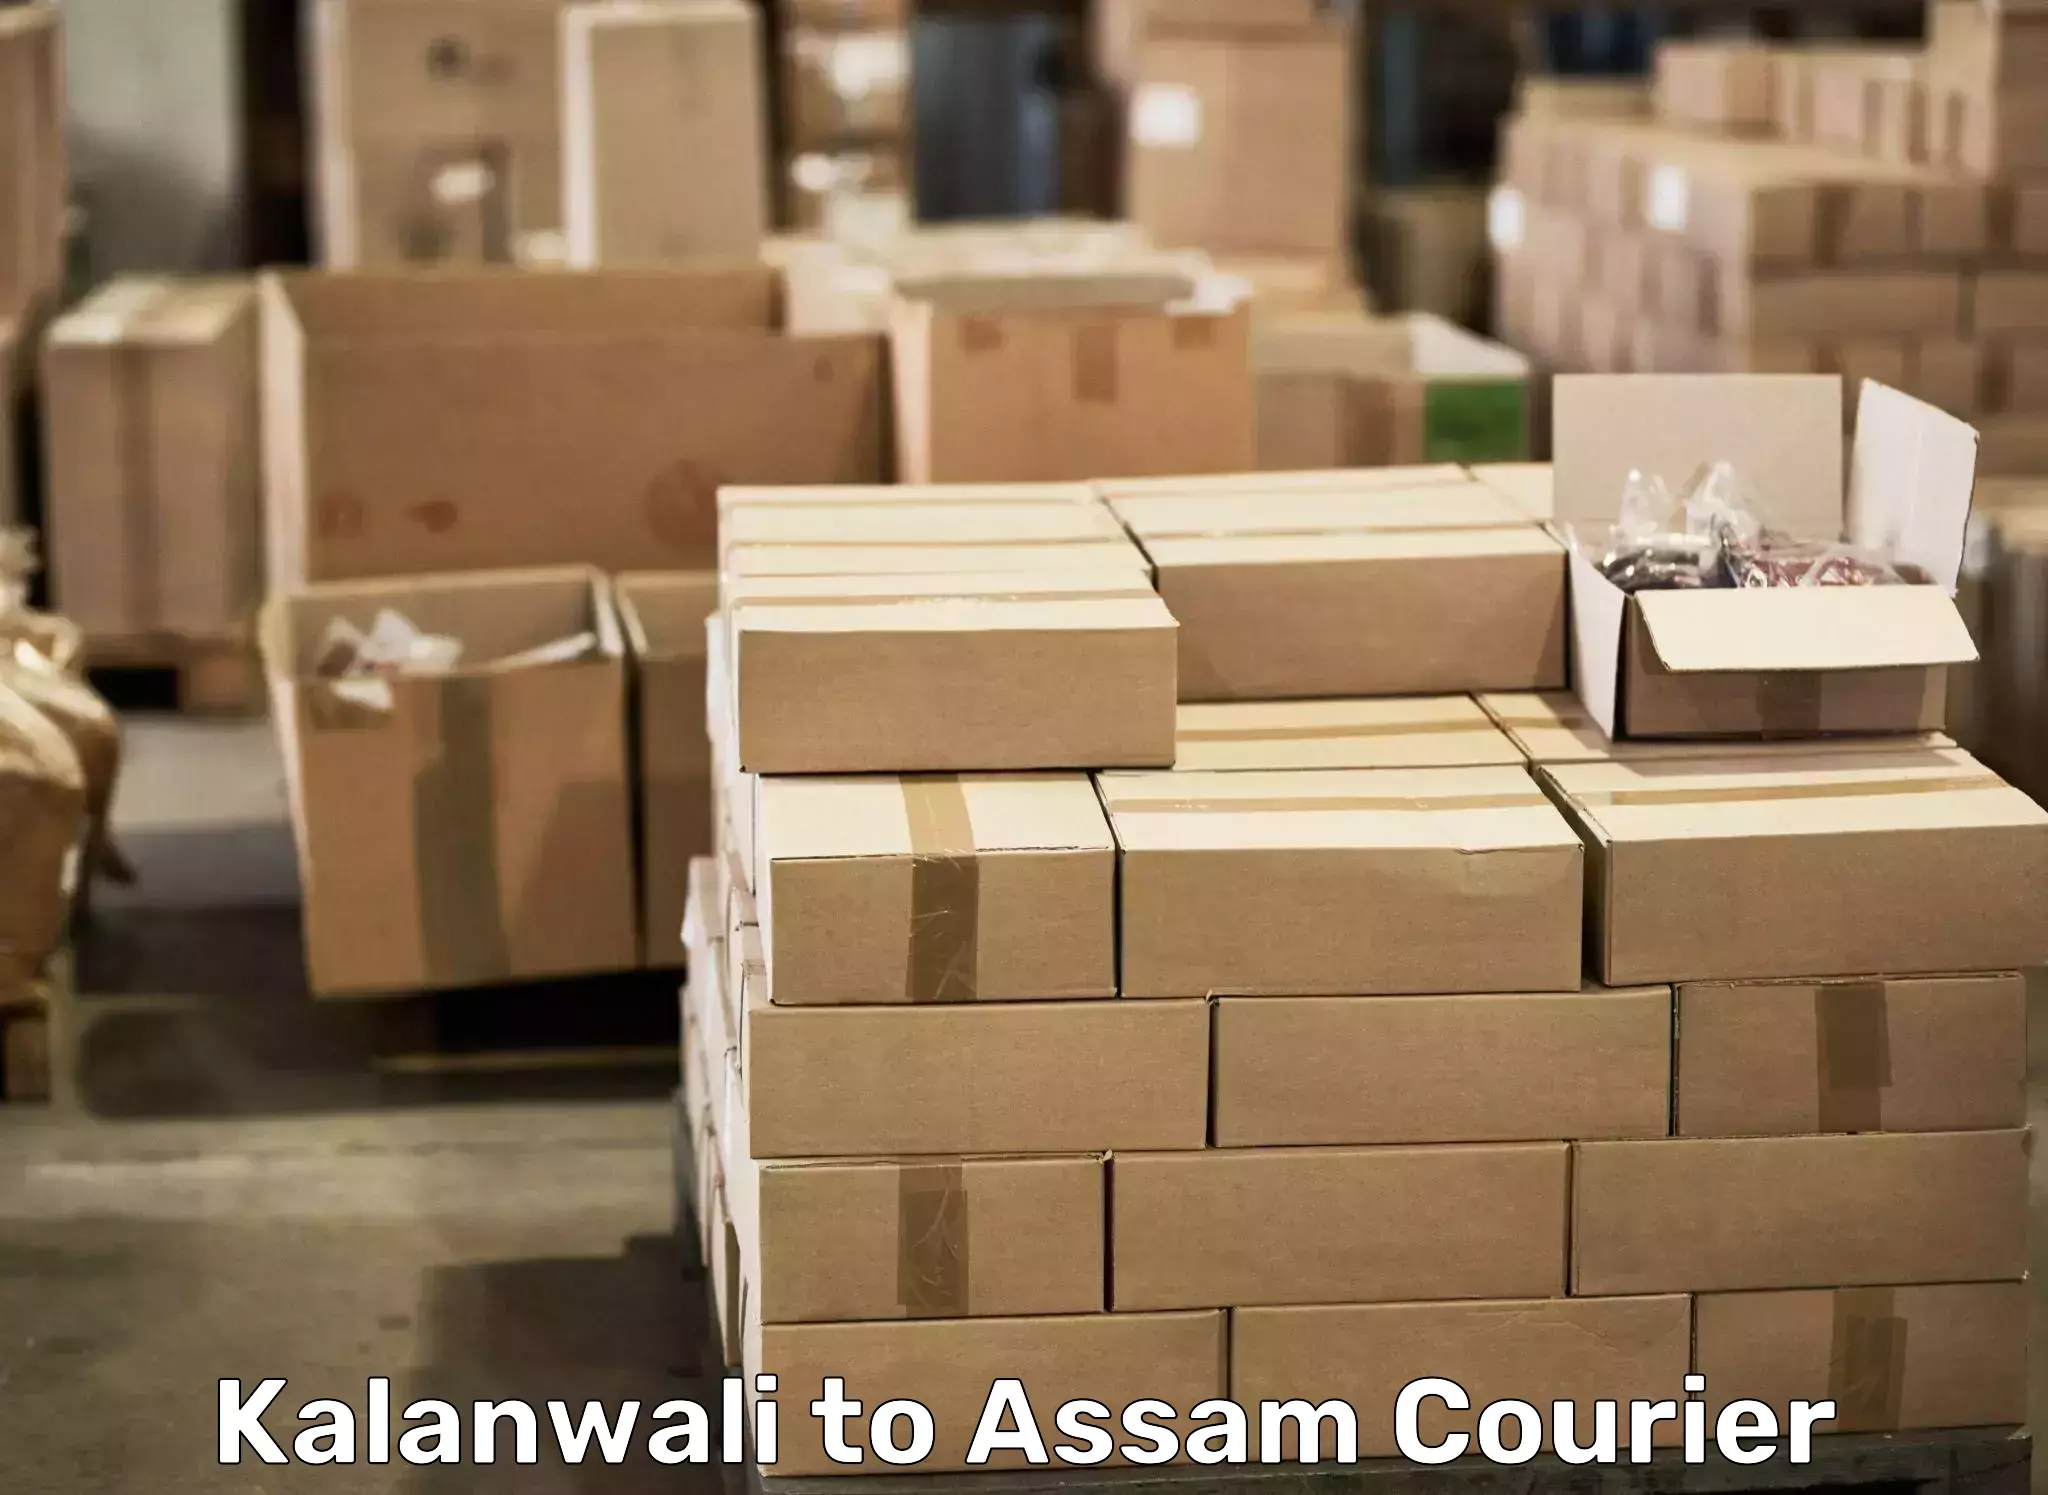 Moving and packing experts Kalanwali to Mariani